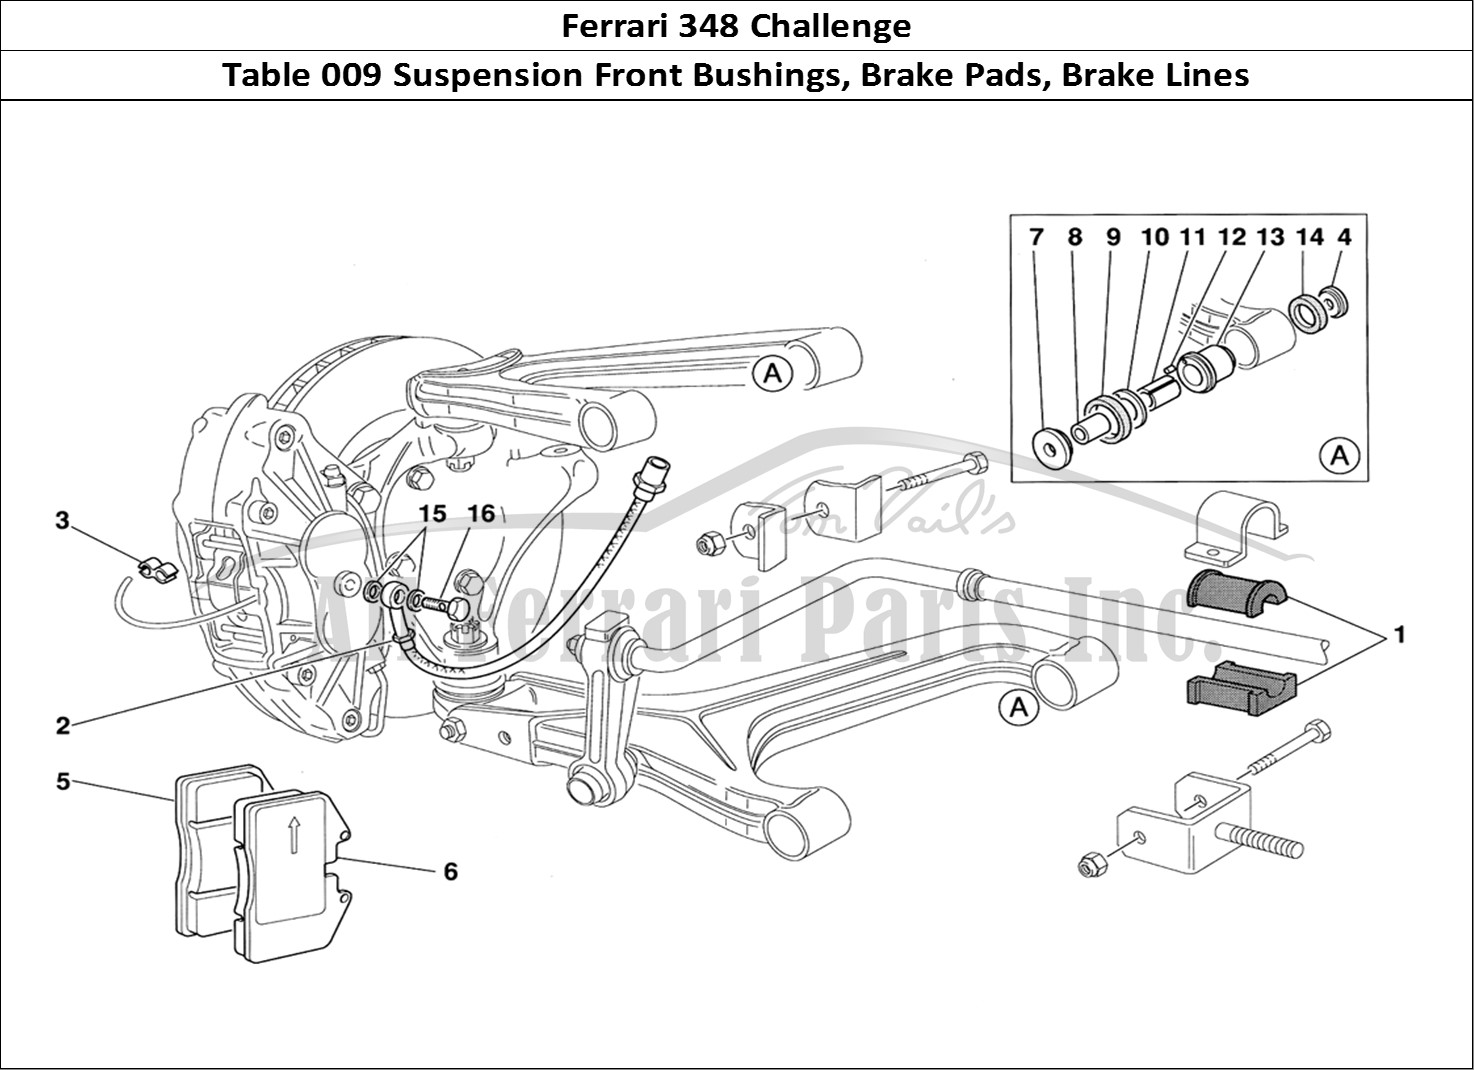 Ferrari Parts Ferrari 348 Challenge (1995) Page 009 Front Suspension Pads and